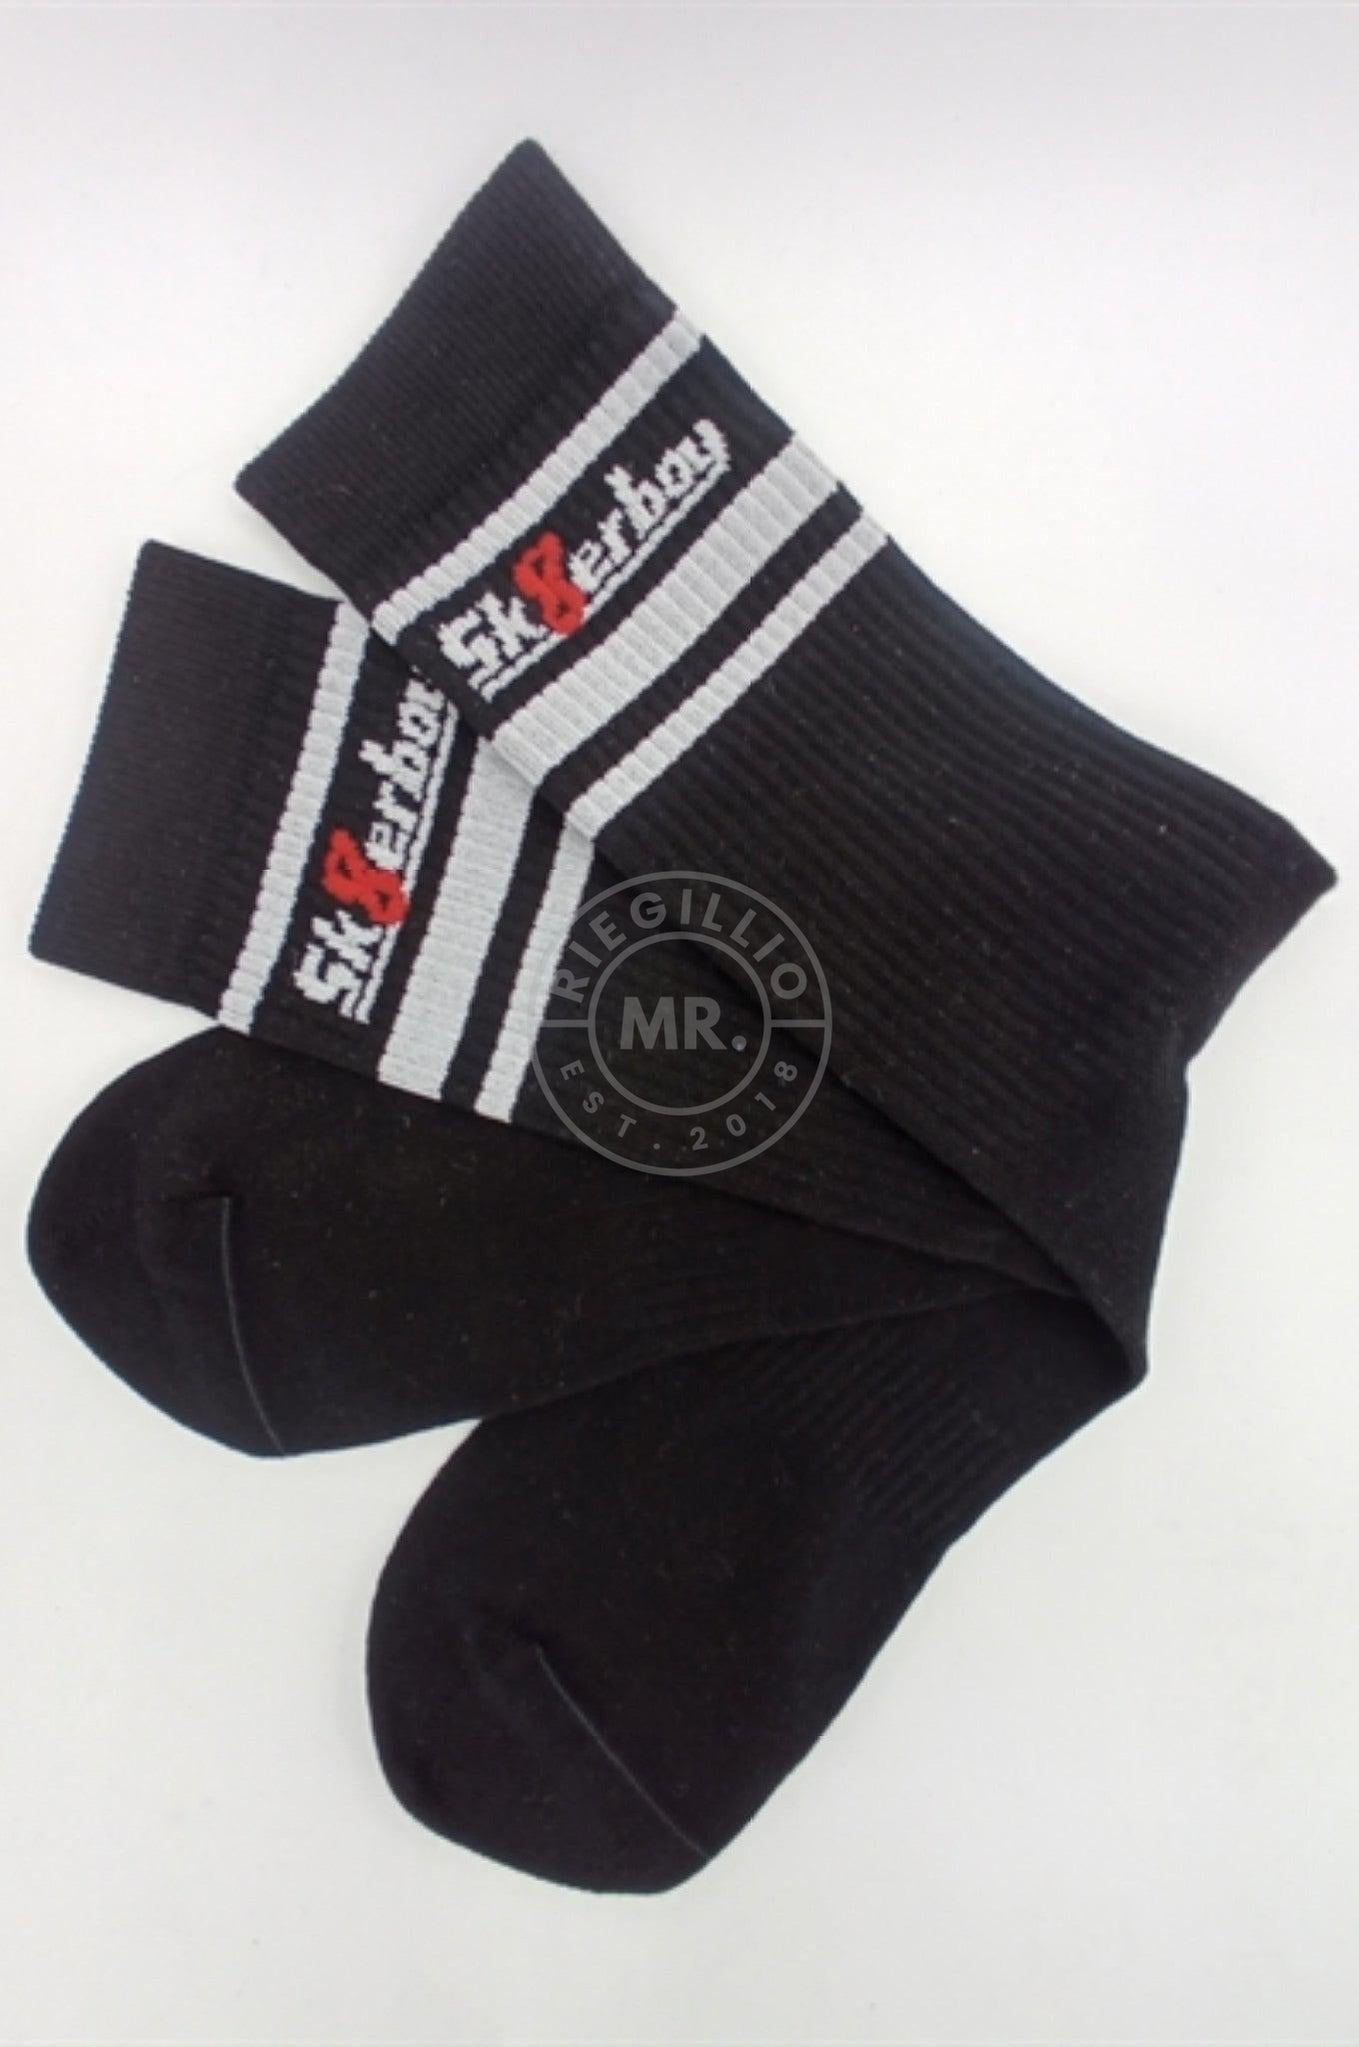 Sk8erboy VICTORY Socks - Black at MR. Riegillio